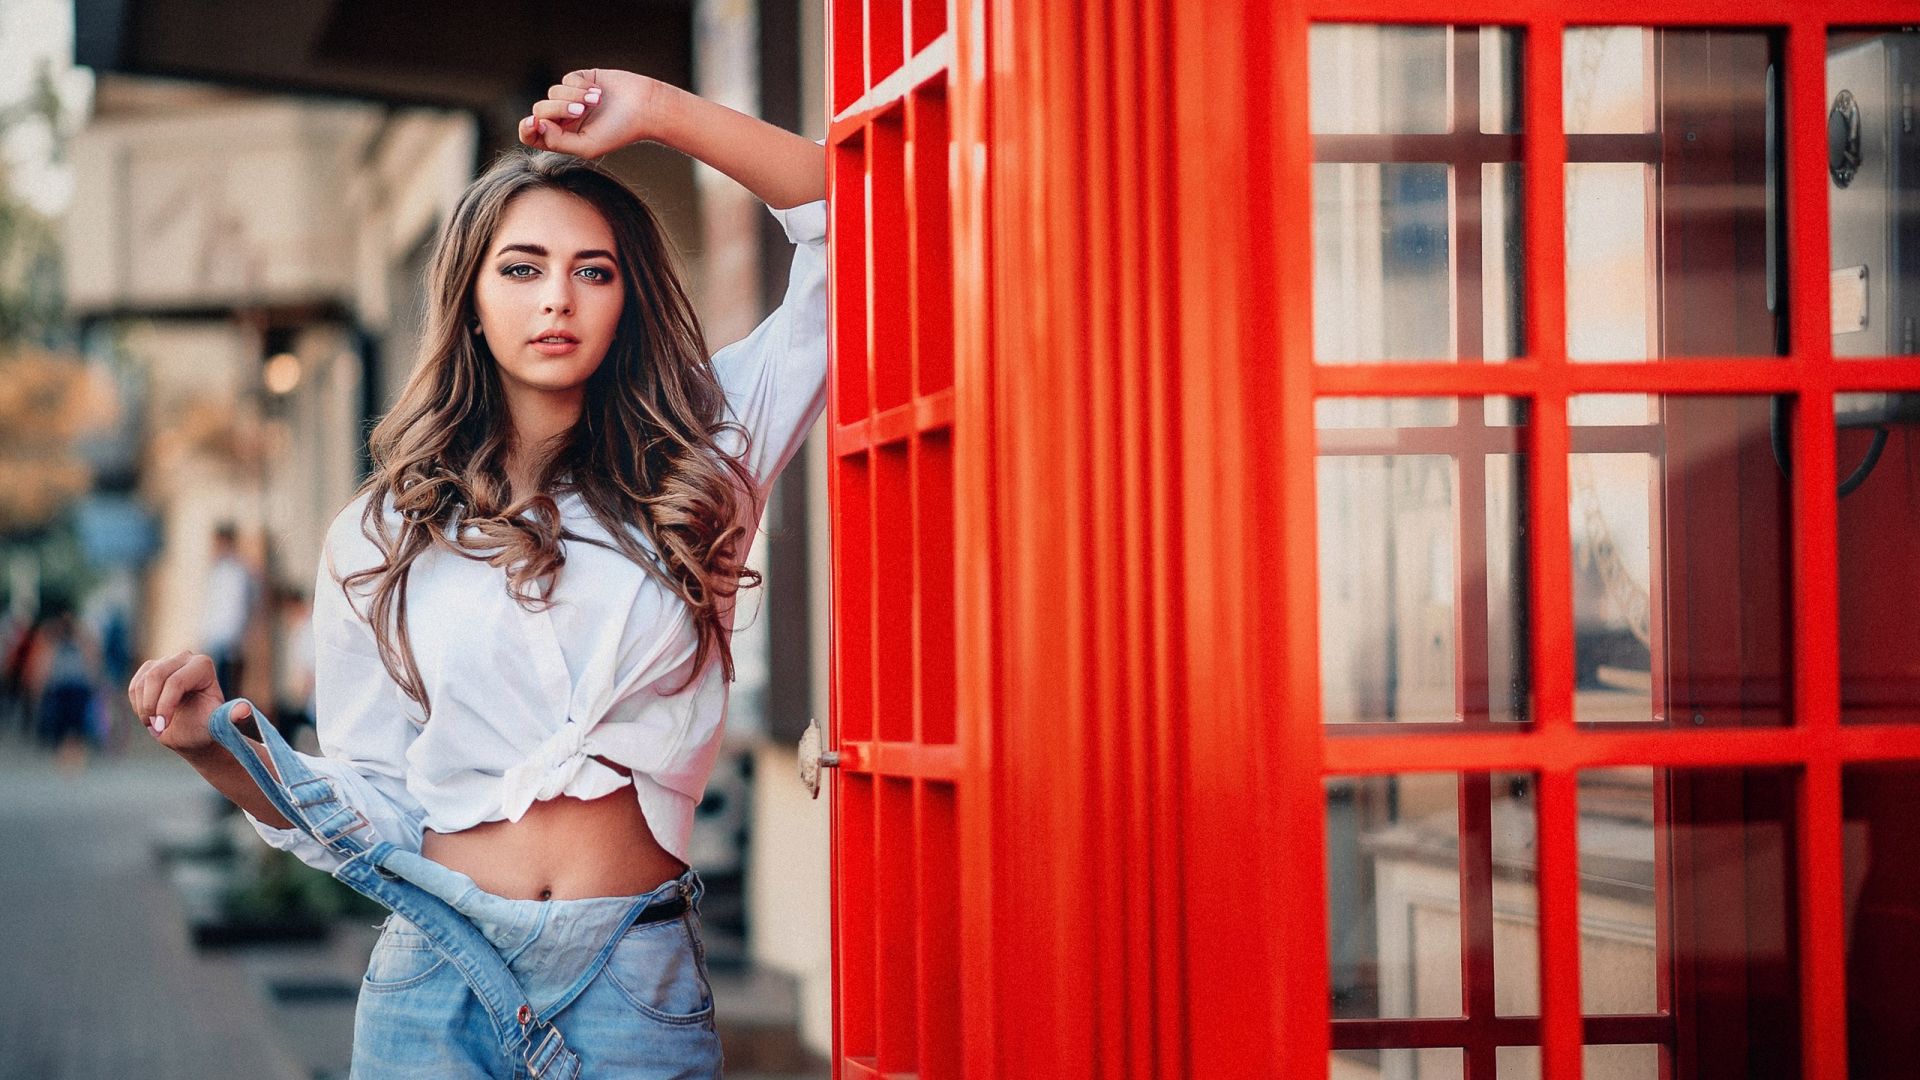 Wallpaper Girl model, telephone booth, jeans